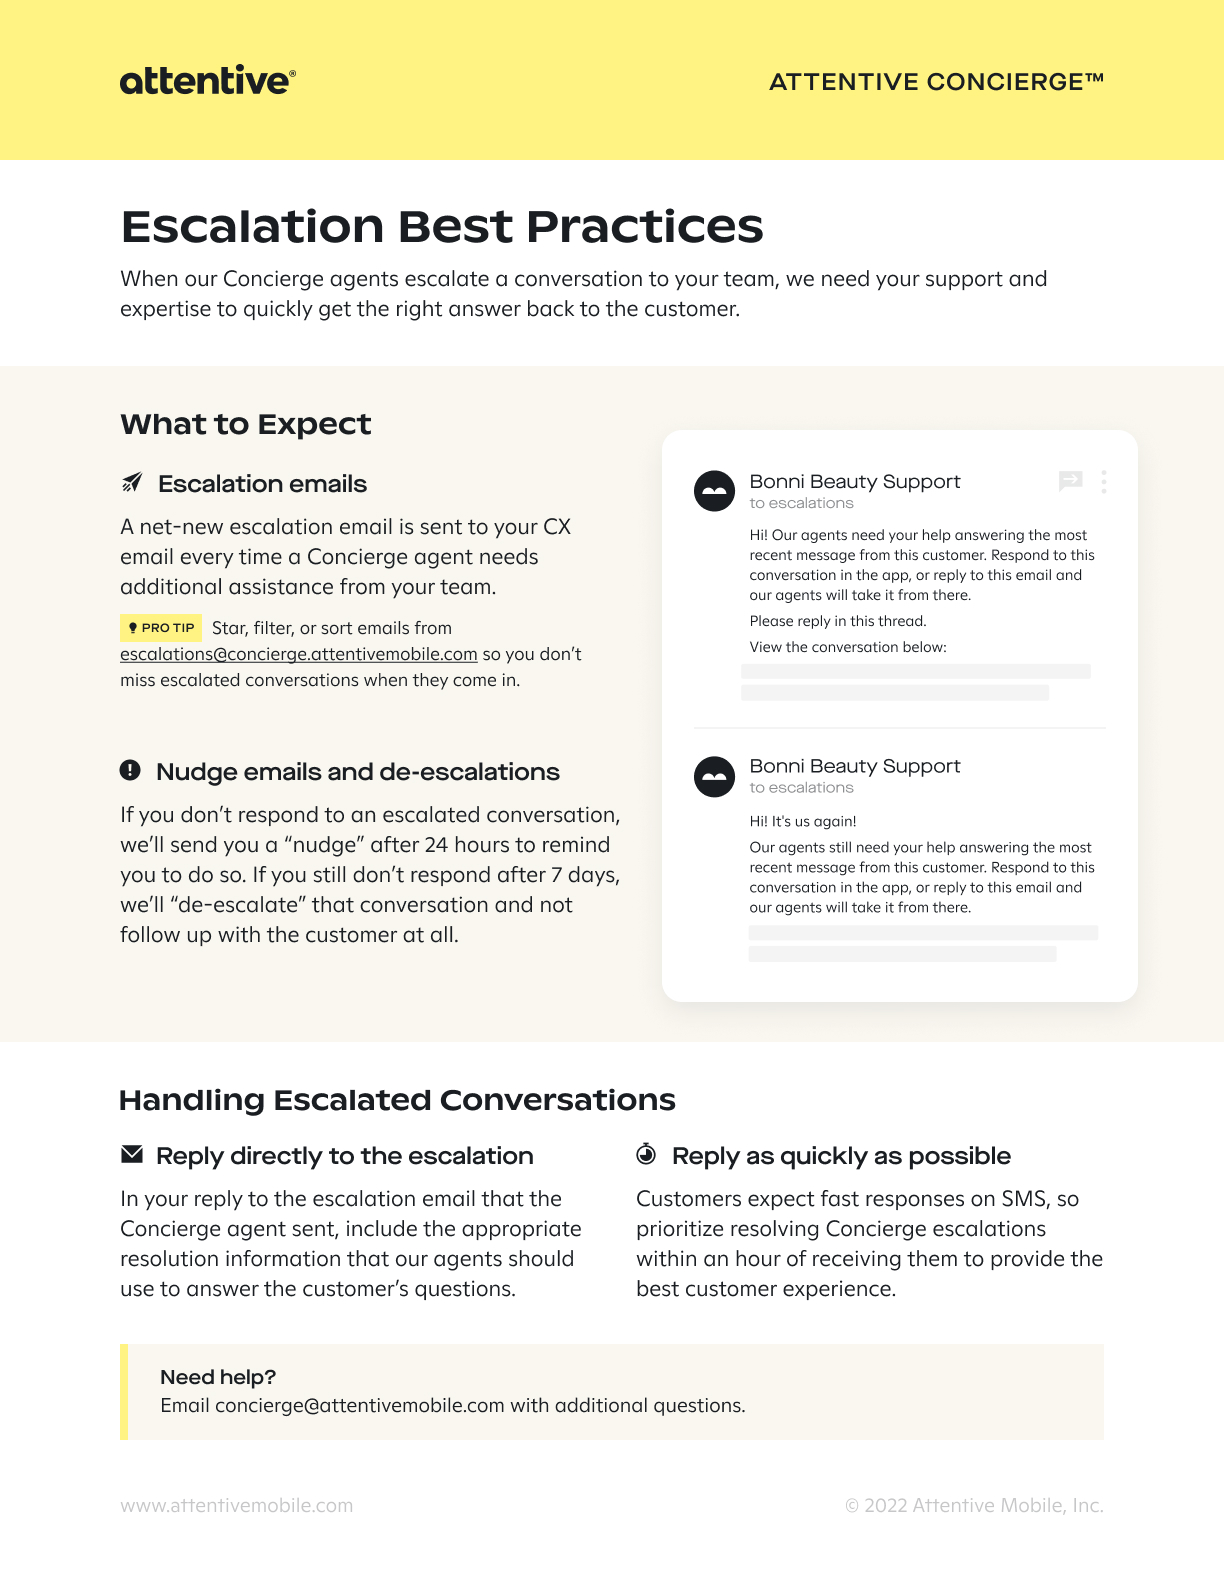 Attentive-Concierge-Escalation-Best-Practices_One-Sheet.jpg